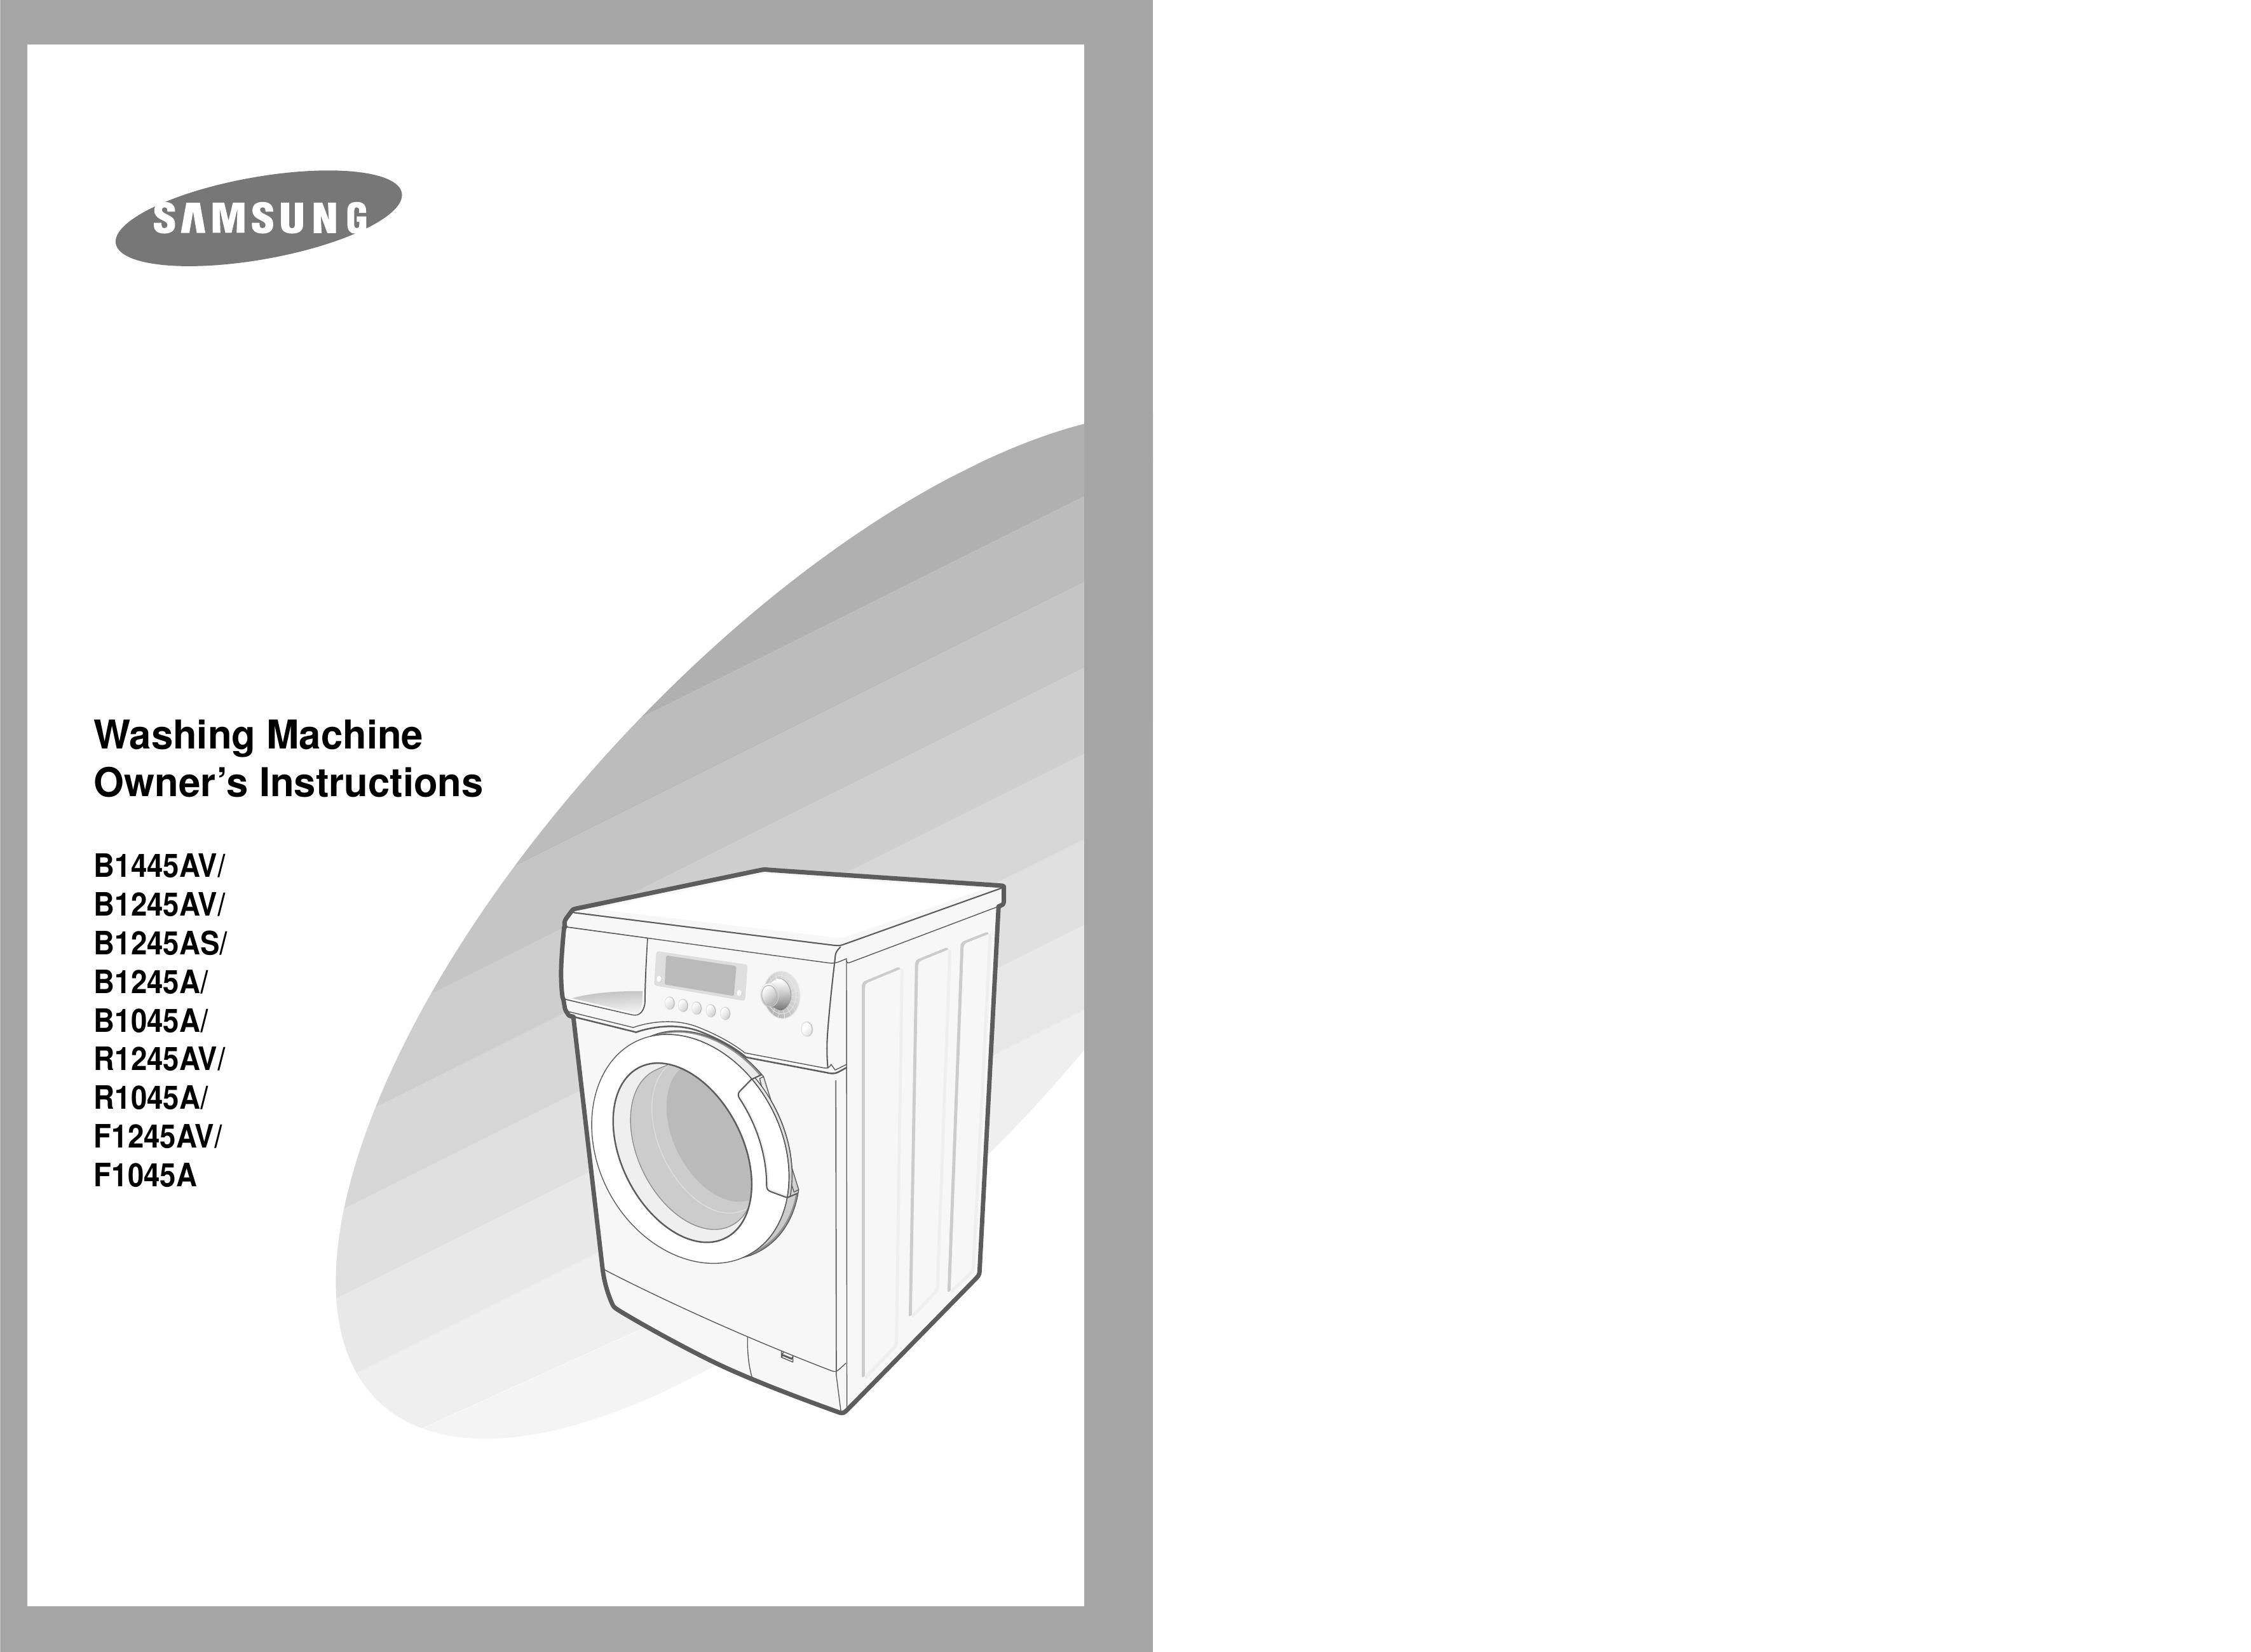 Samsung F1045A Washer User Manual